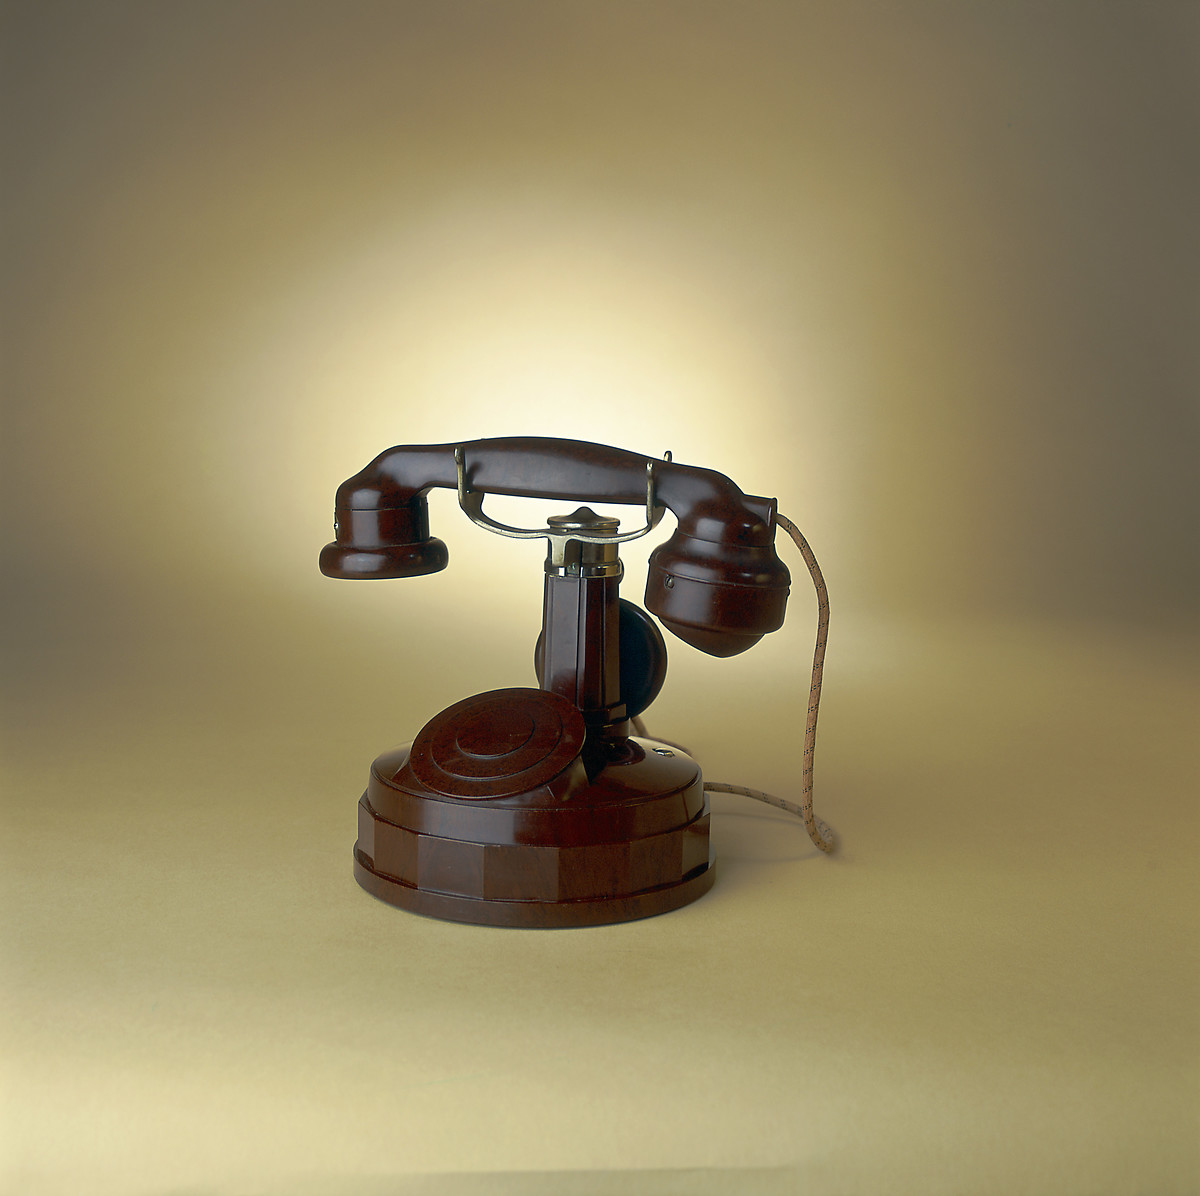 Jacquesson phone (1924)